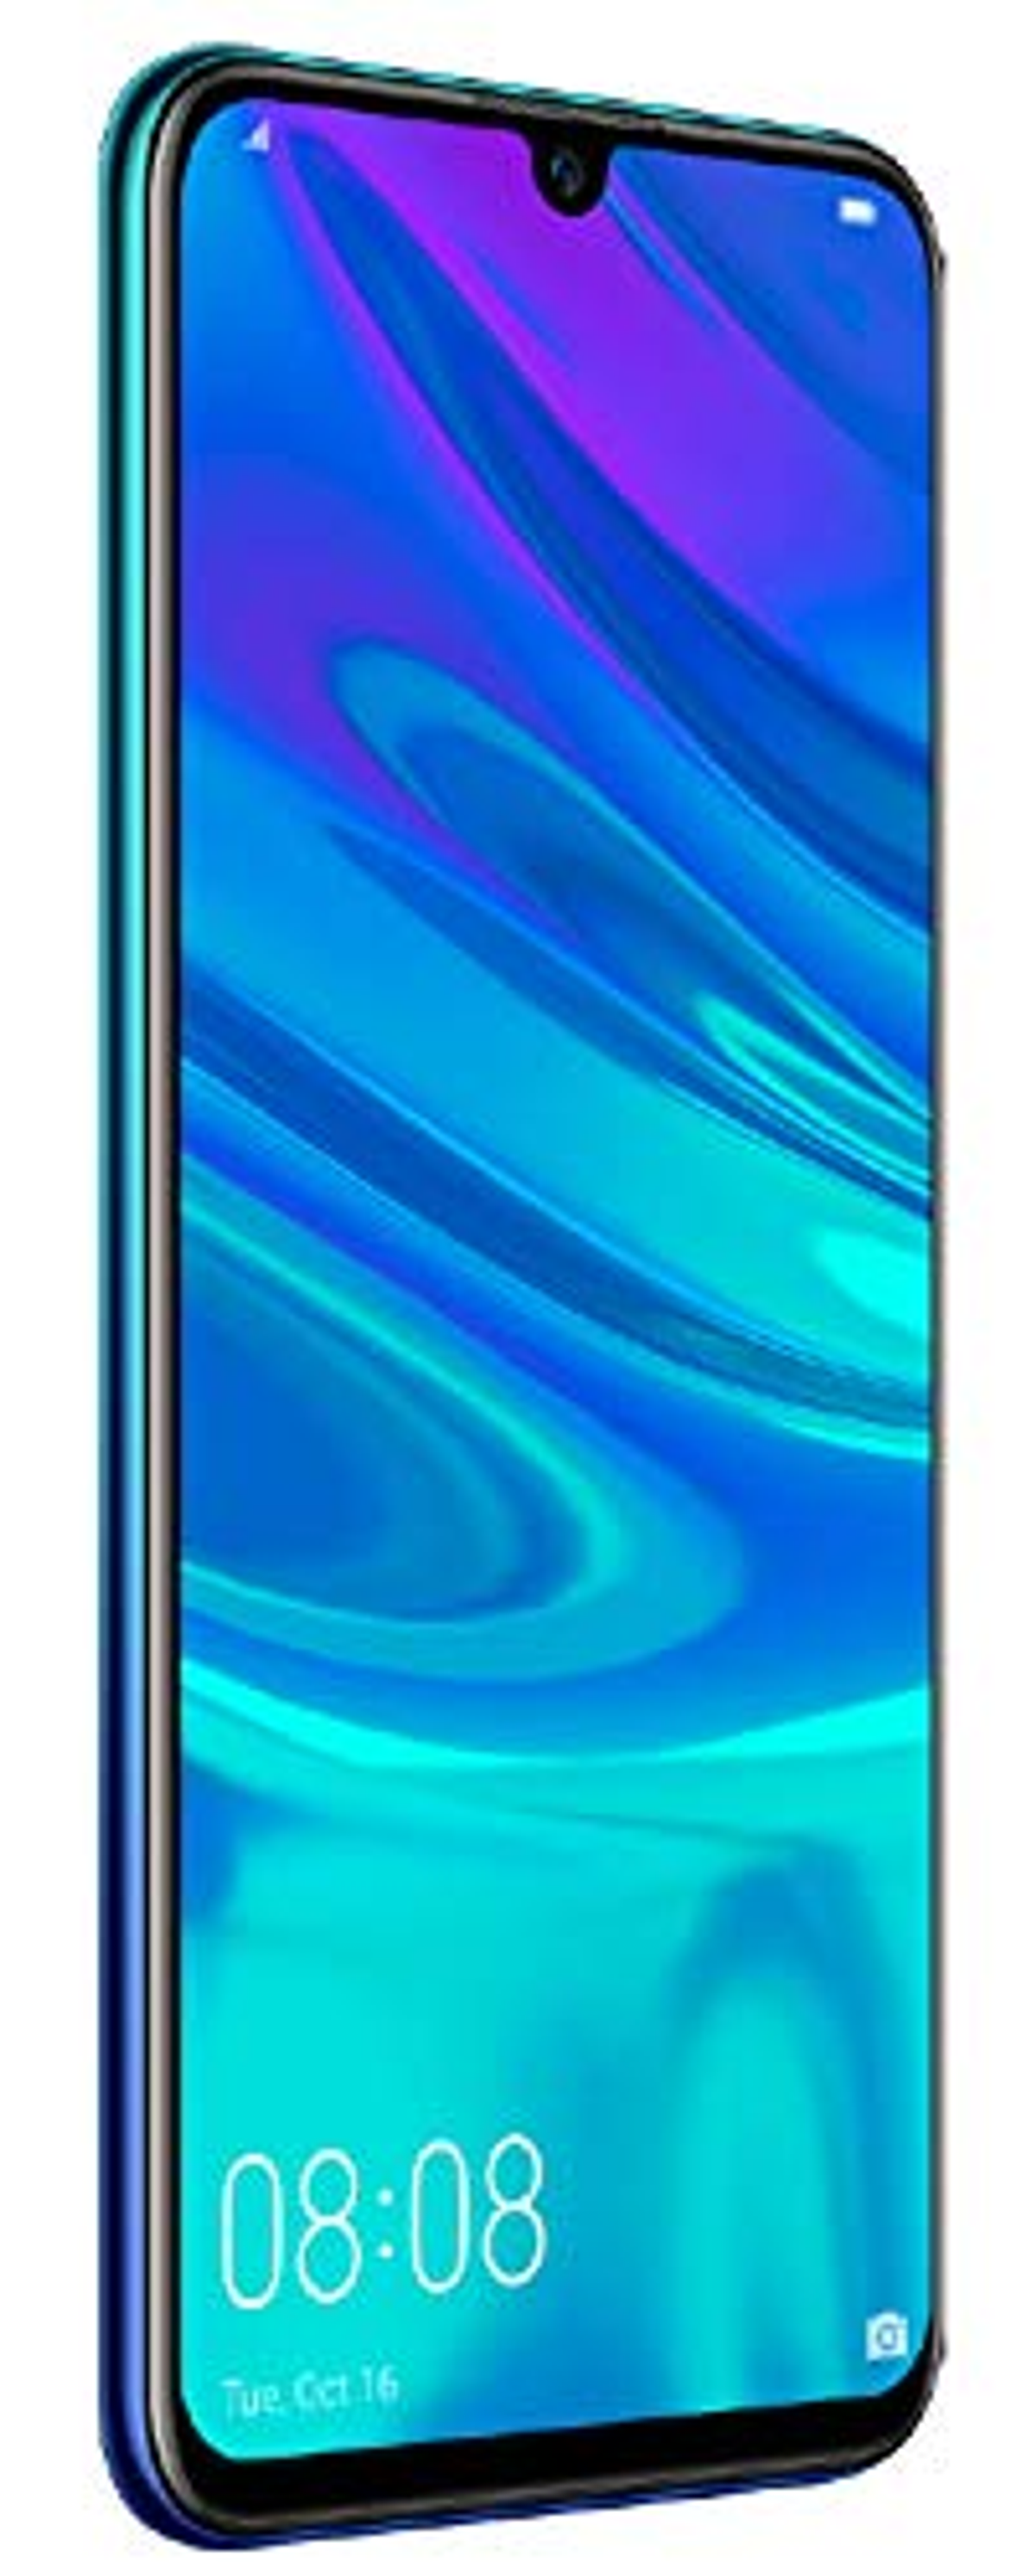 HUAWEI P SMART (2019) AURORA GB Blue 64 Aurora Dual SIM BLUE